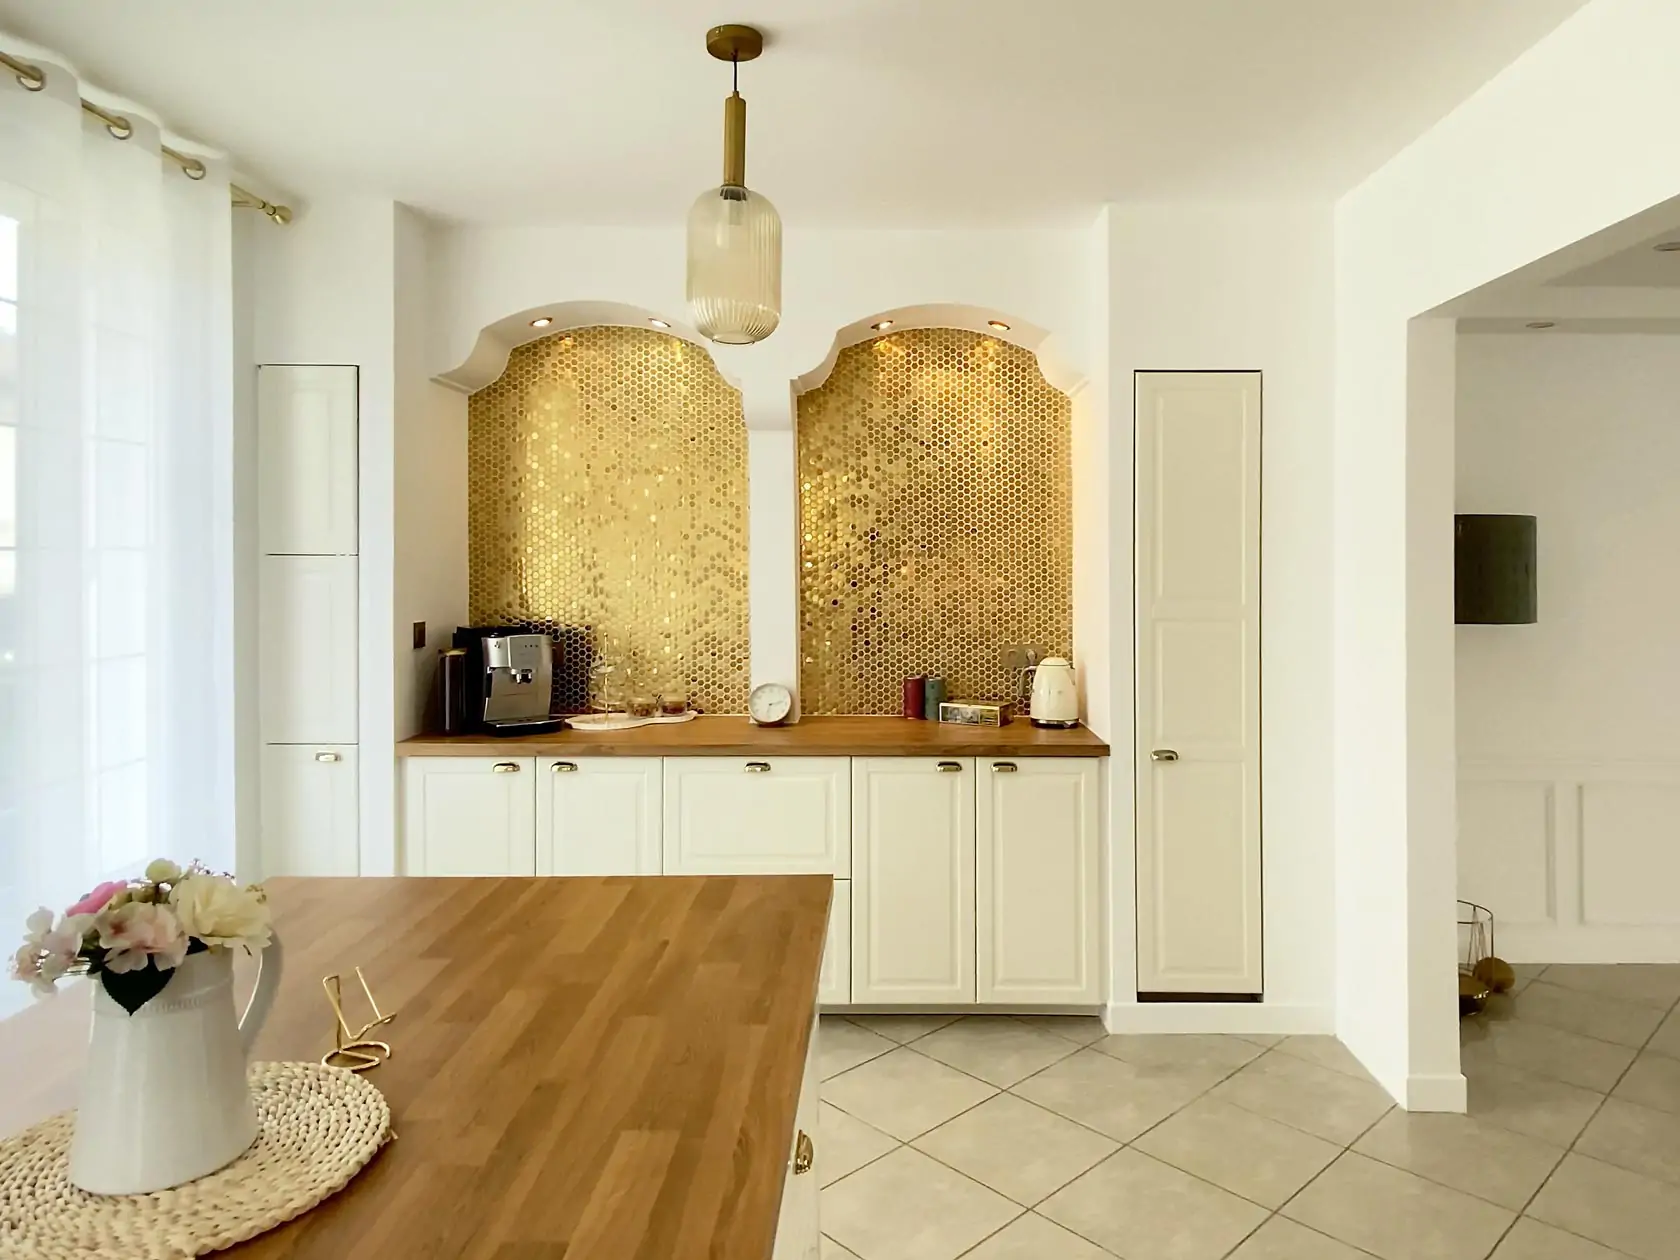 Golden Backsplash Kitchen Wall Tiles Patterned Tiles Bathroom Hexagon Mosaic Interiordesign  1